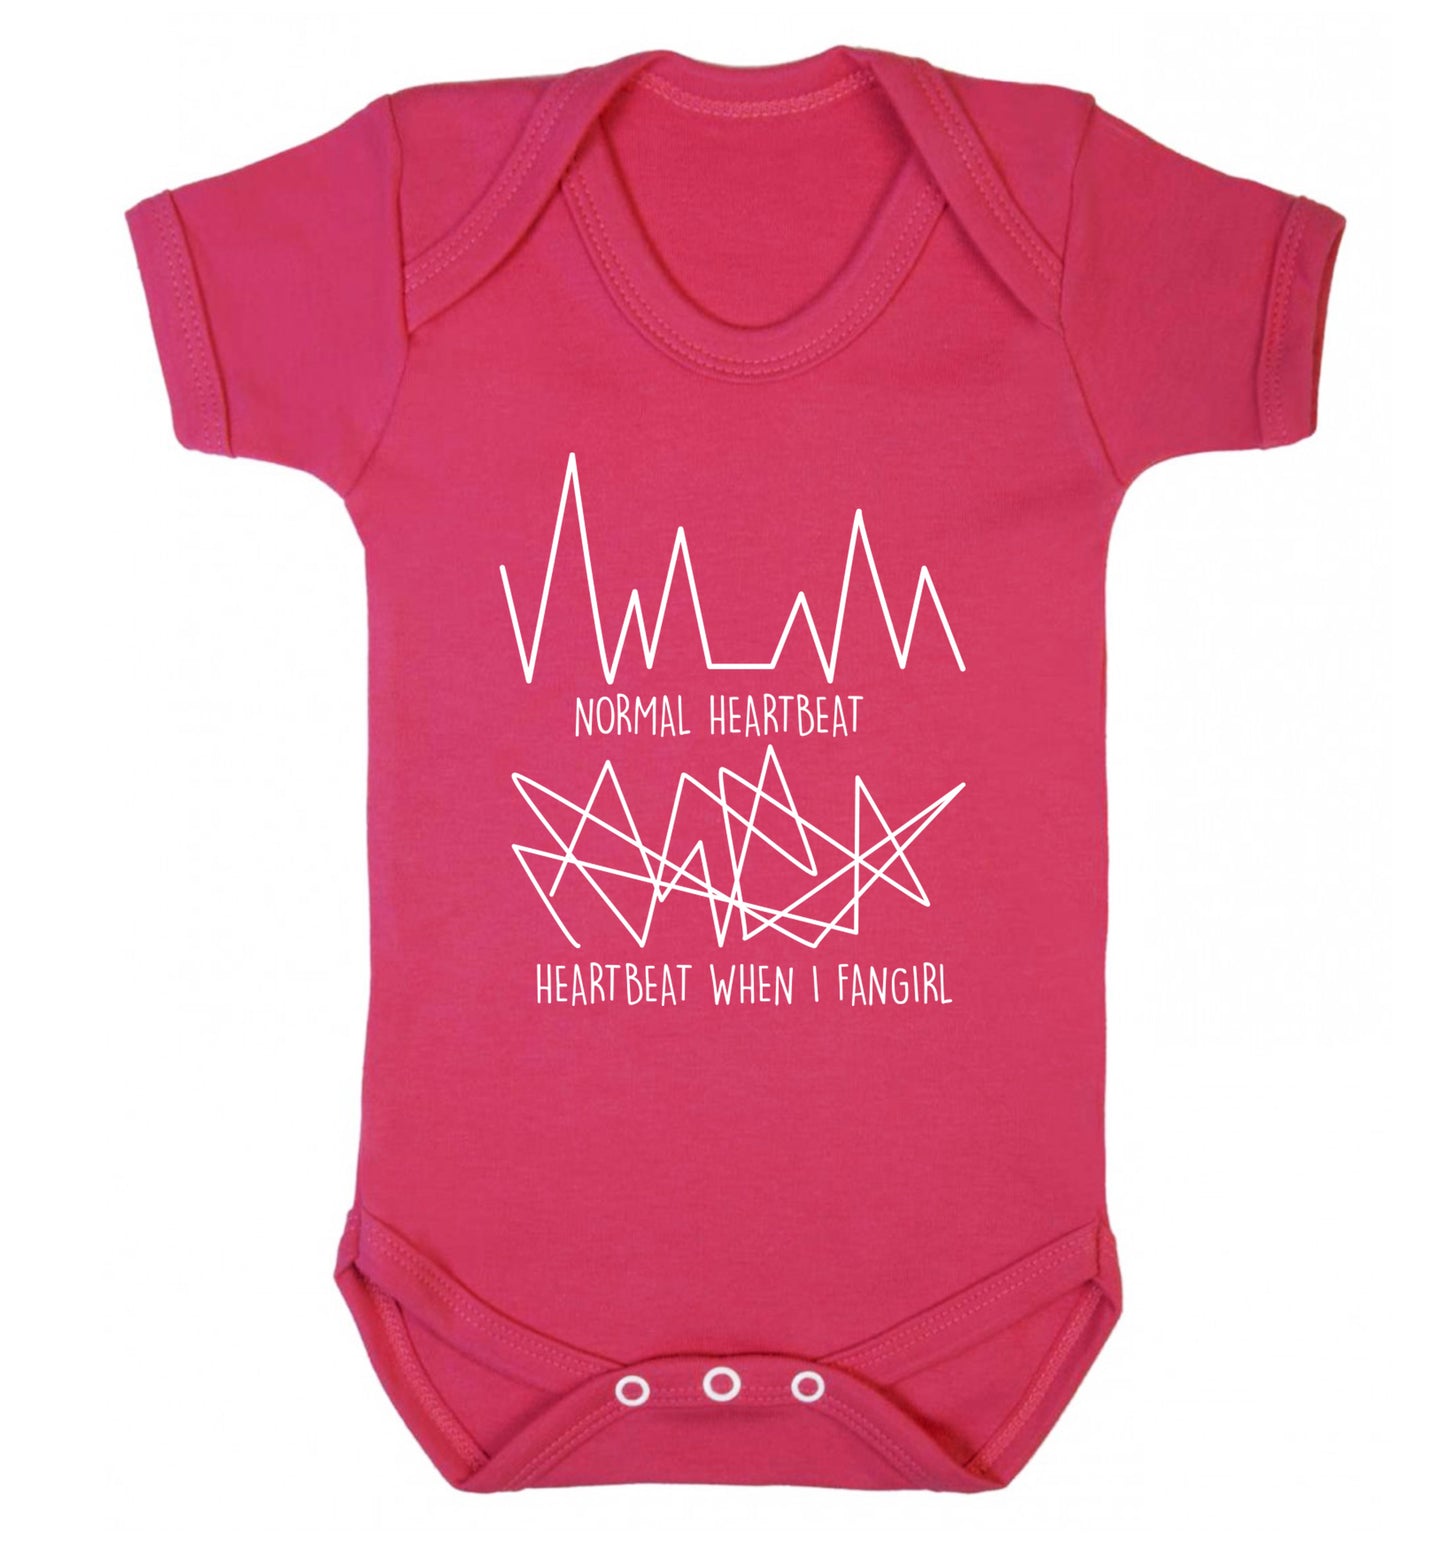 Normal heartbeat heartbeat when I fangirl Baby Vest dark pink 18-24 months